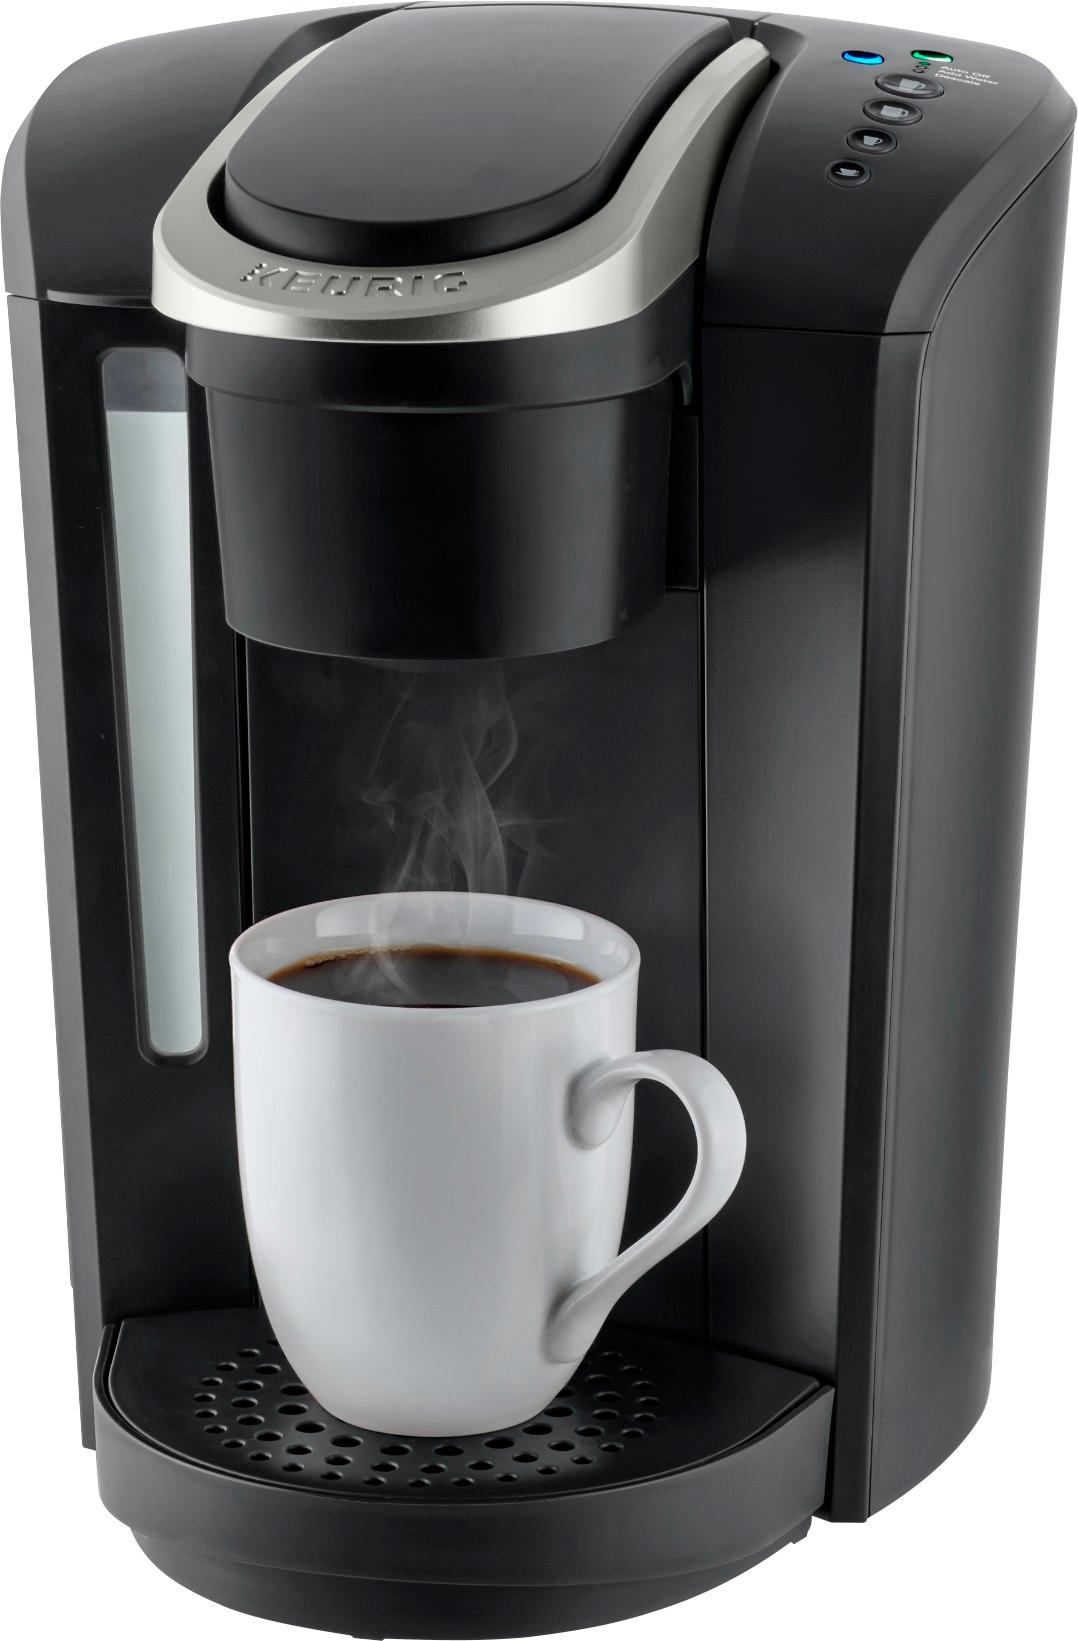 Keurig K-Select Matte Black Single Serve Coffee Maker with